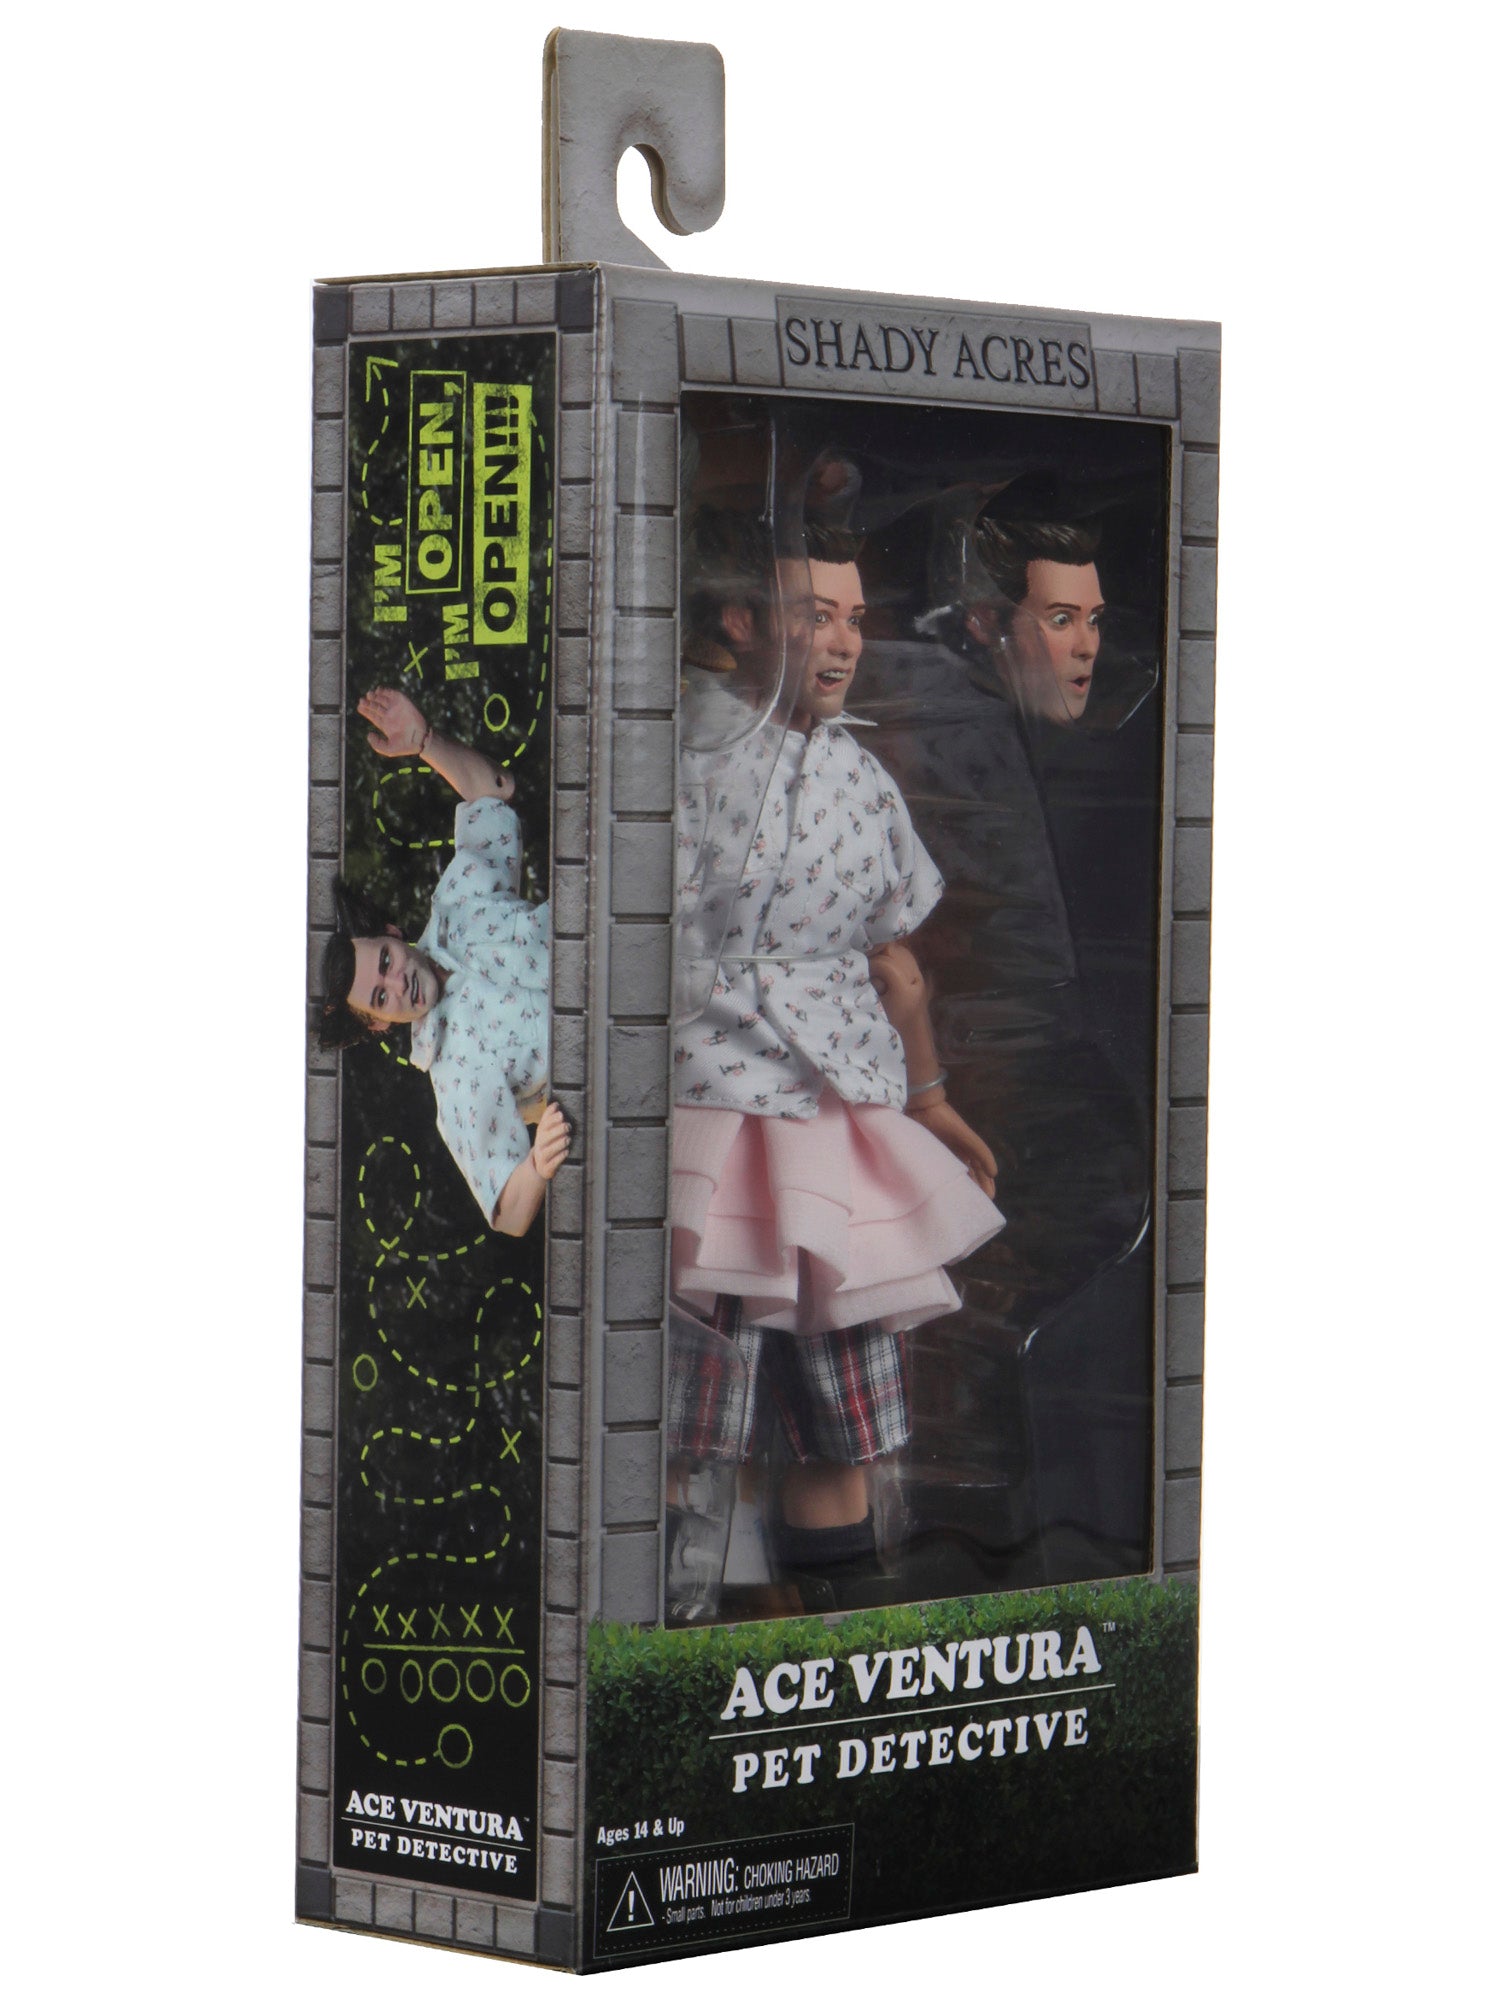 NECA - Ace Ventura: Pet Detective - 8" Clothed Action Figure - Ace Ventura (Shady Acres) - costumes.com